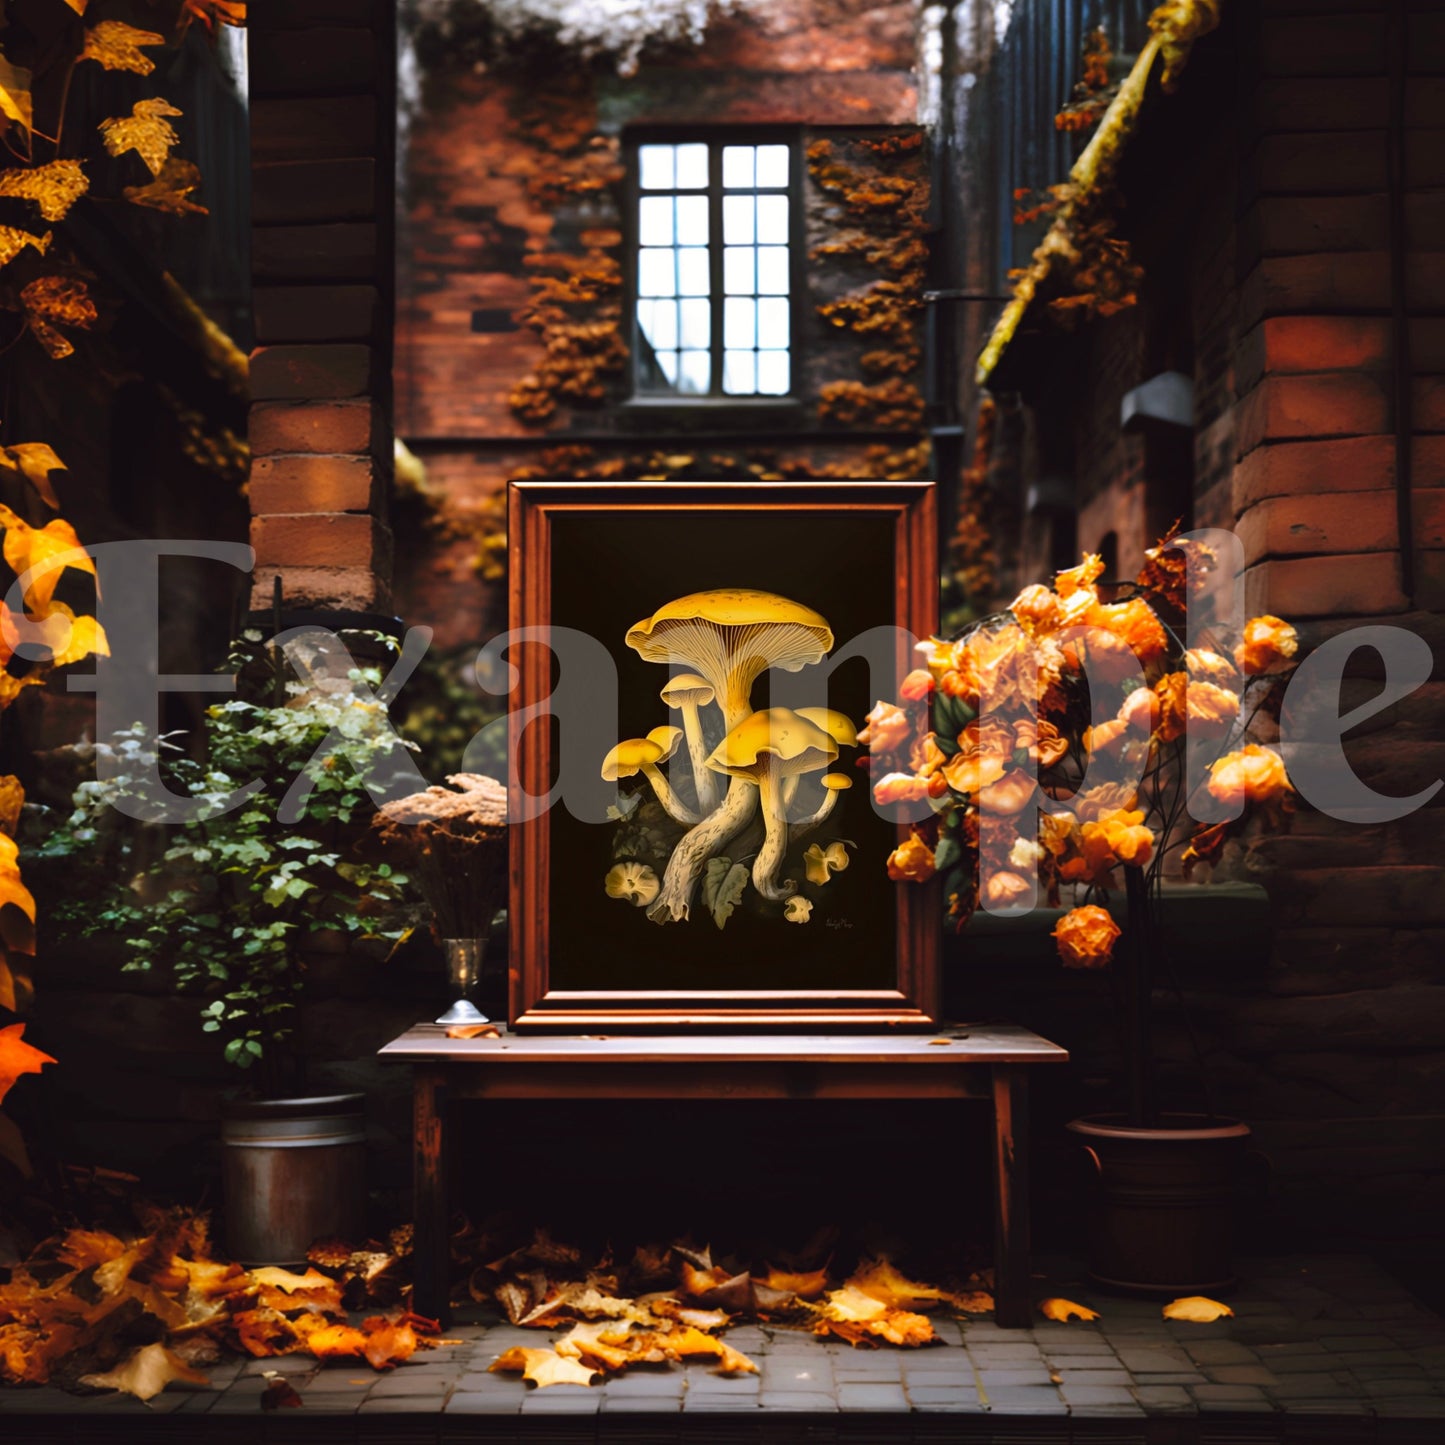 Rustic Autumn Wood Frame Mockup